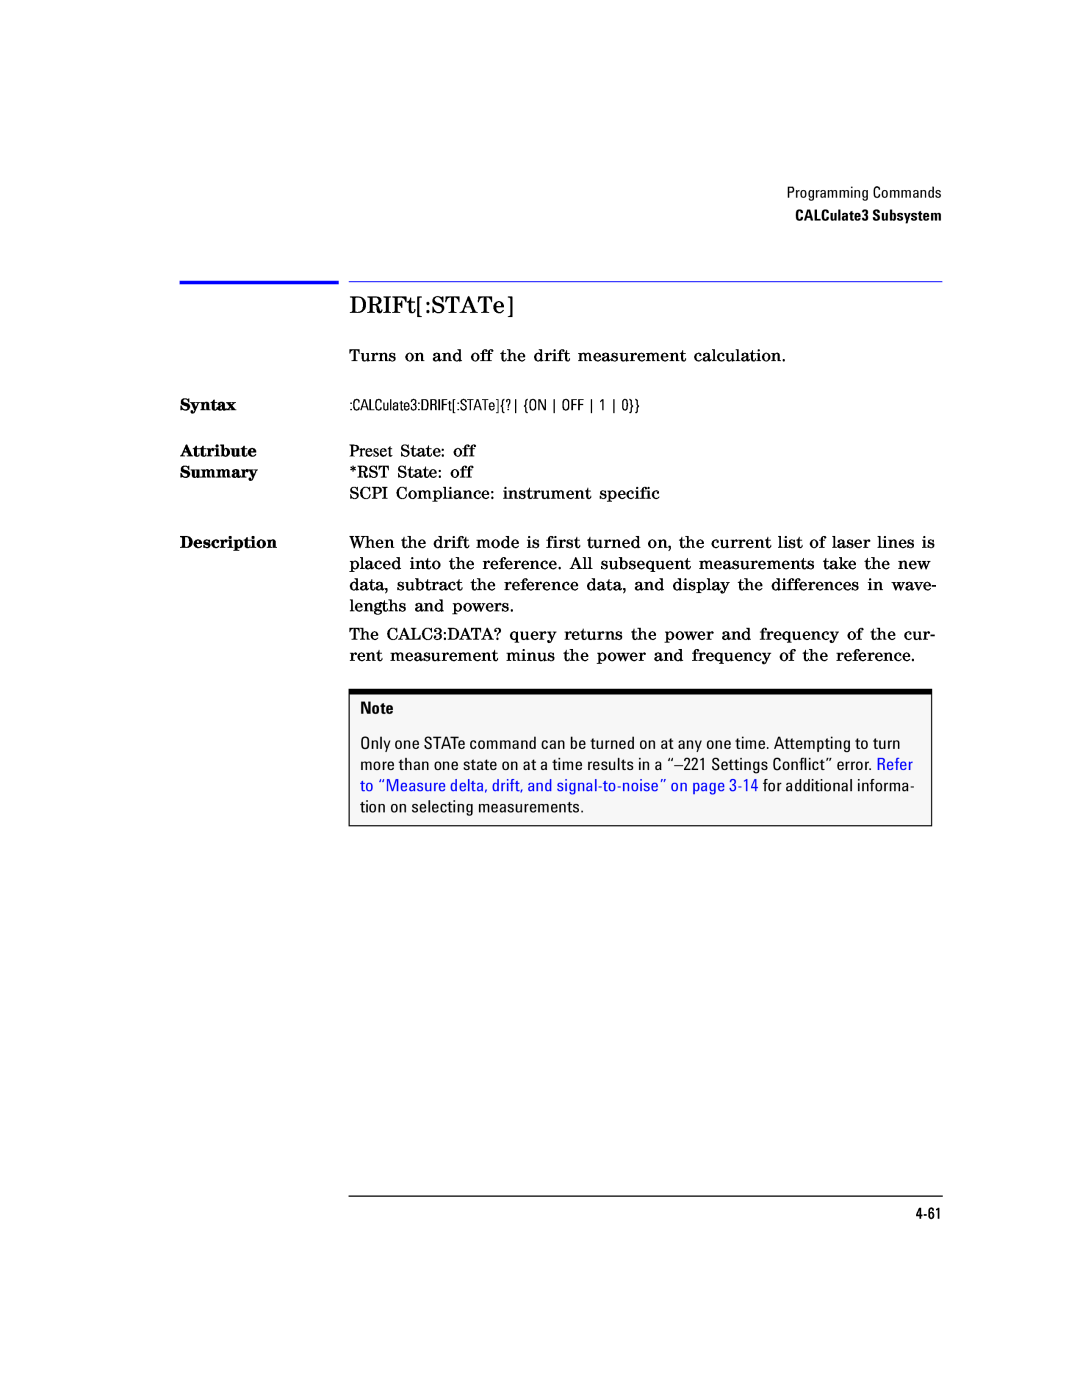 Agilent Technologies Agilent 86120C manual DRIFtSTATe, Syntax, Attribute, Summary, Description 